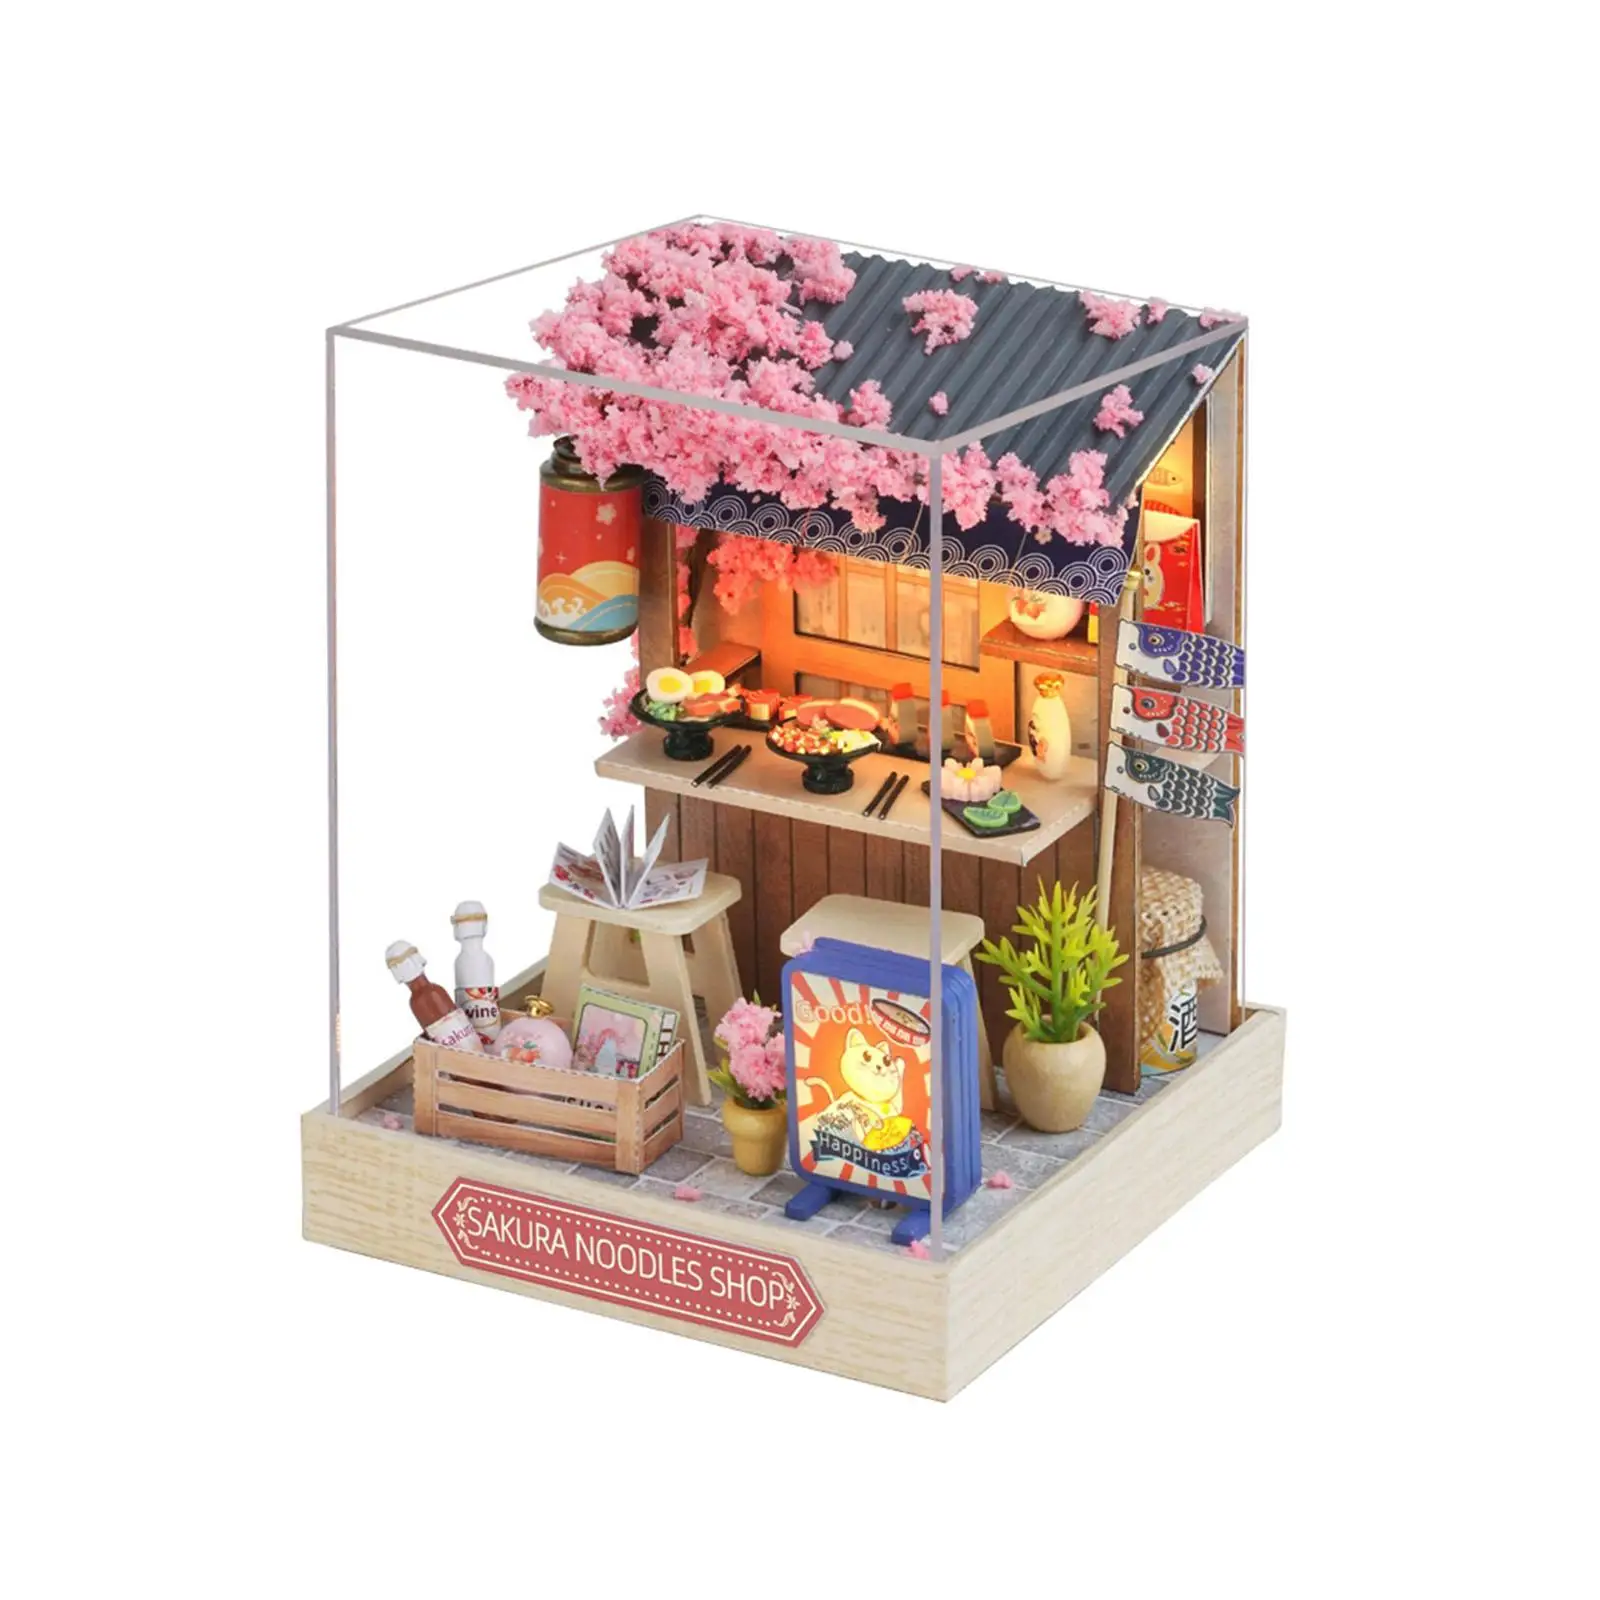 DIY Wooden Miniature Dollhouse Mini Handmade House Model for Adults Kids